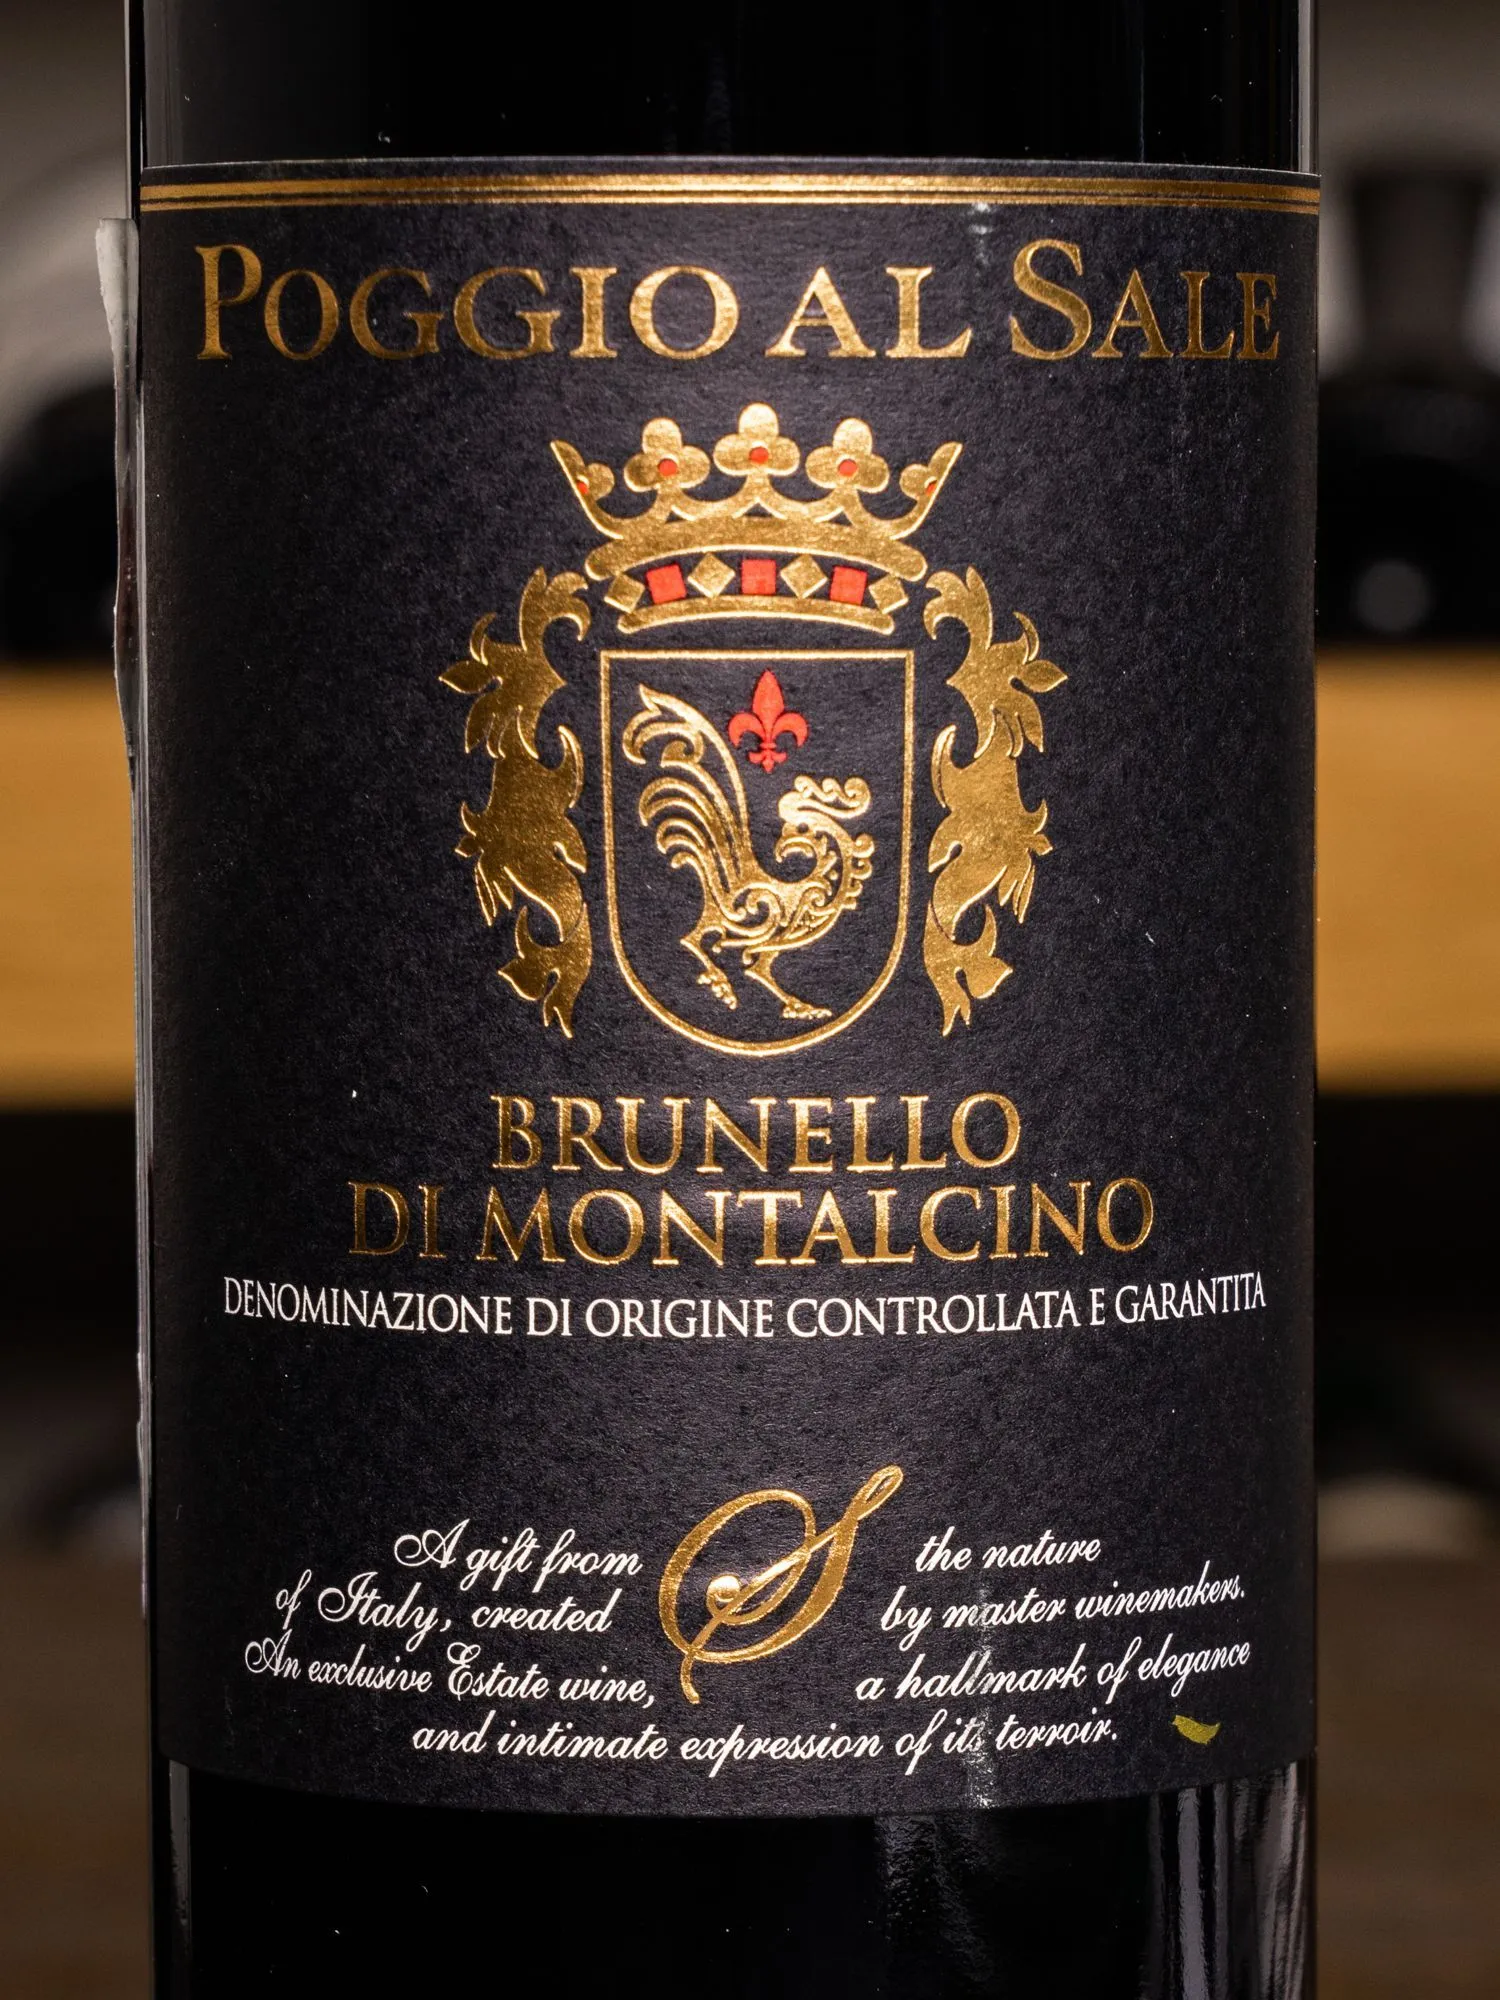 Вино Poggio al Sale Brunello di Montalcino / Брунелло ди Монтальчино Поджио аль Сале - этикетка